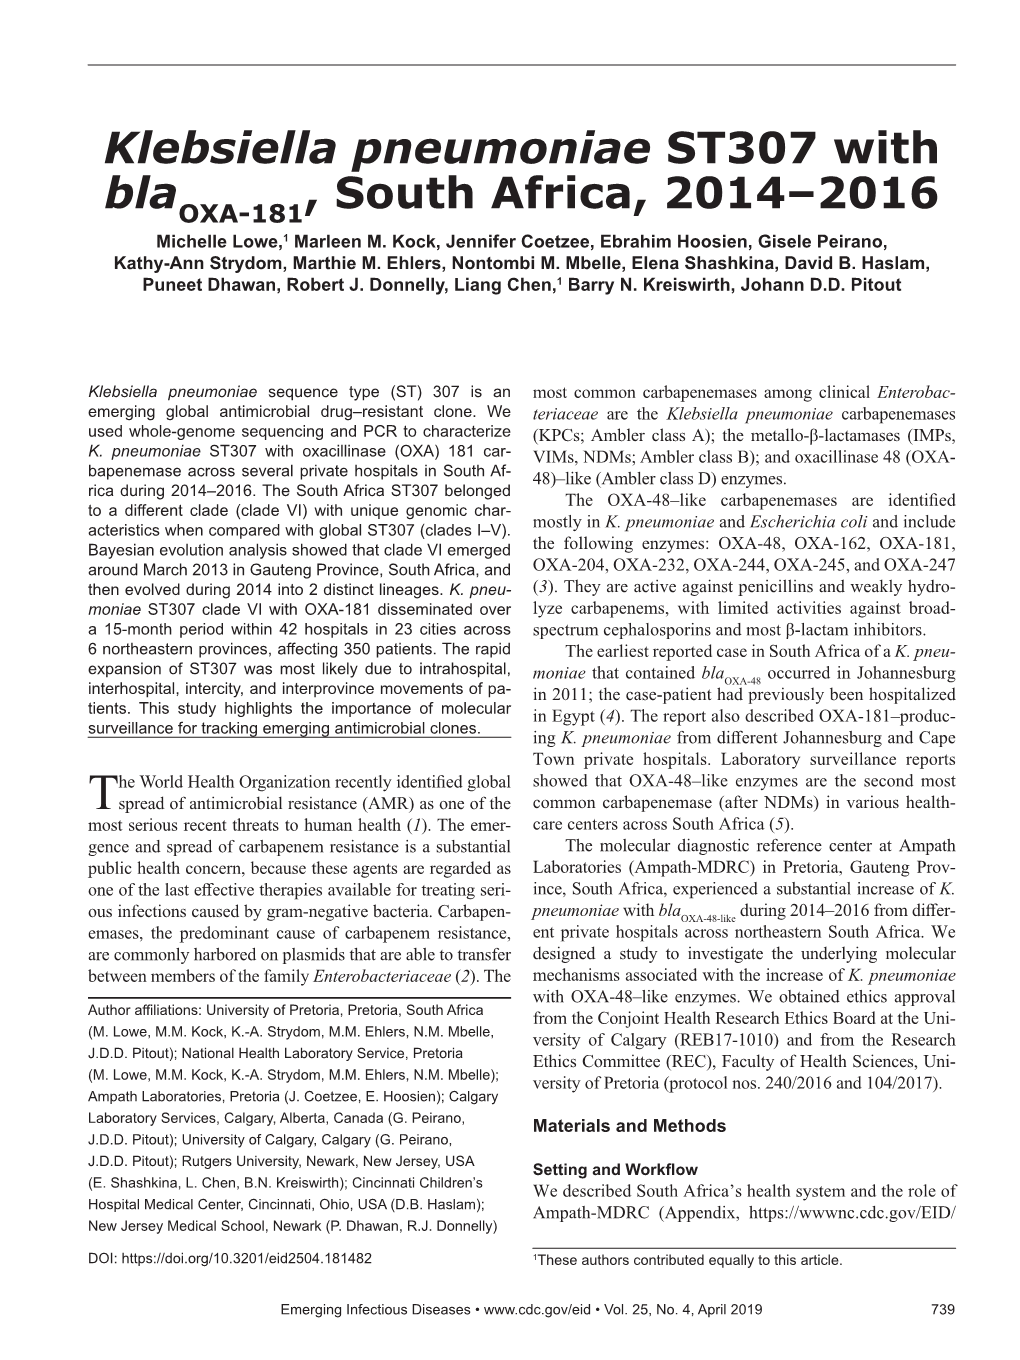 Klebsiella Pneumoniae ST307 with Bla , South Africa, 2014–2016